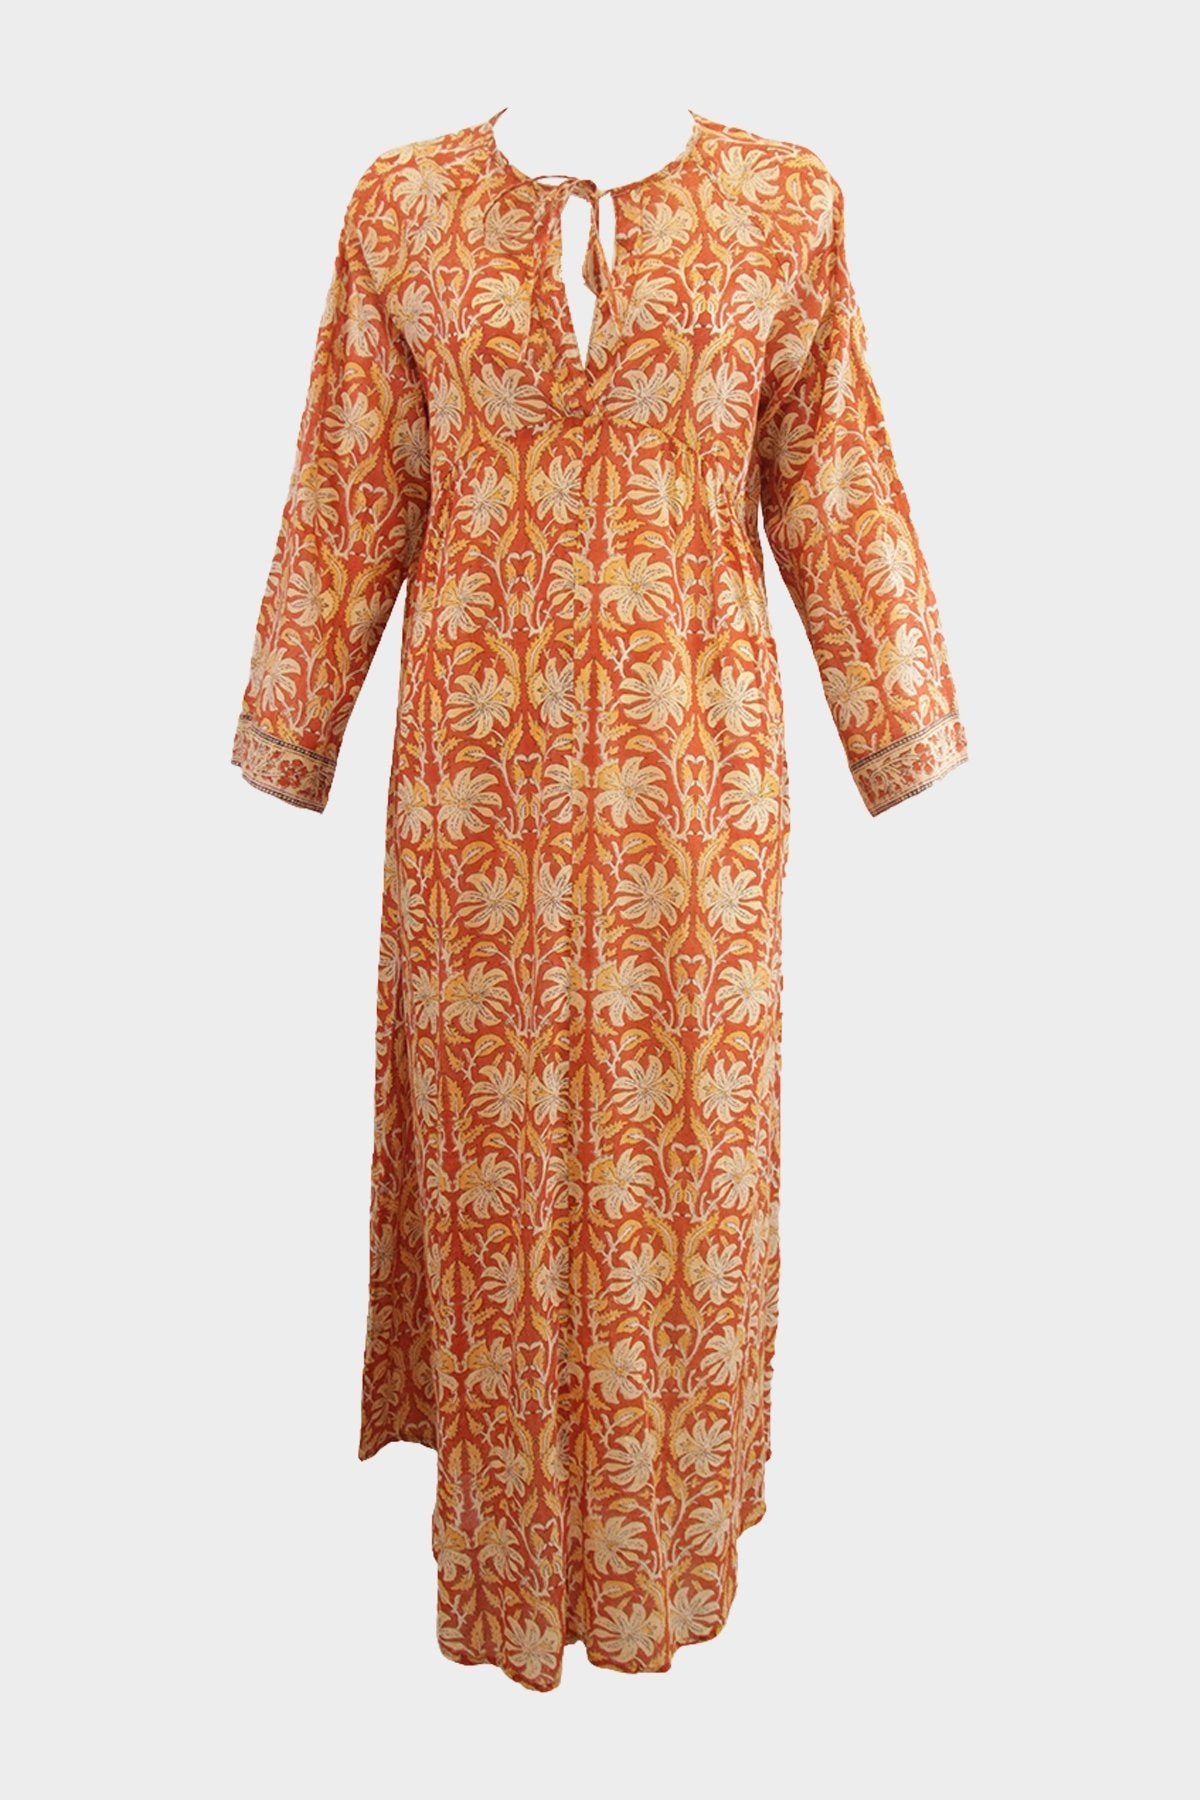 Didi Midi Dress in Clementine - shop-olivia.com